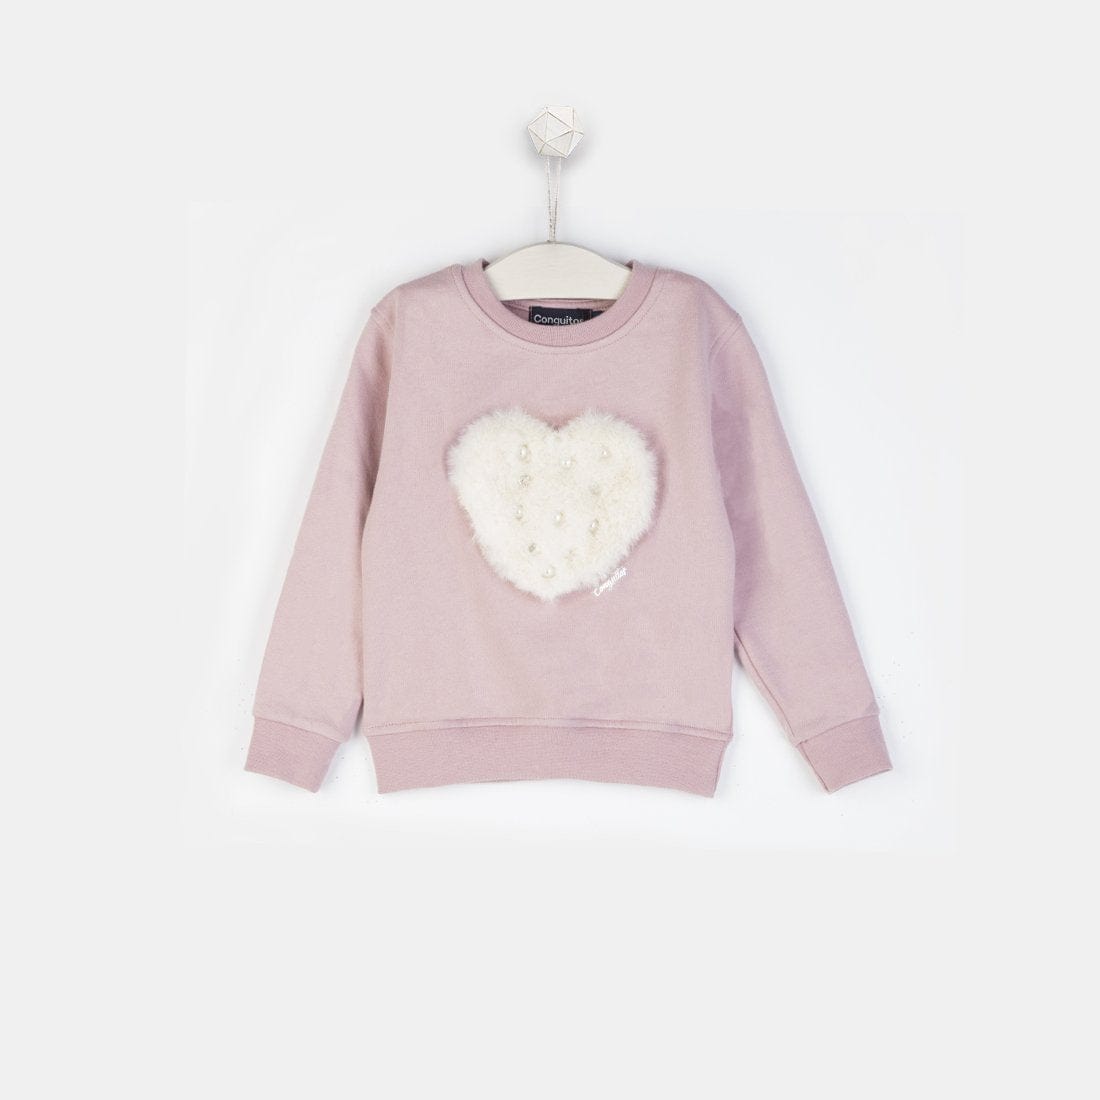 CONGUITOS TEXTIL Clothing Girl's Pink Heart Hair Sweatshirt